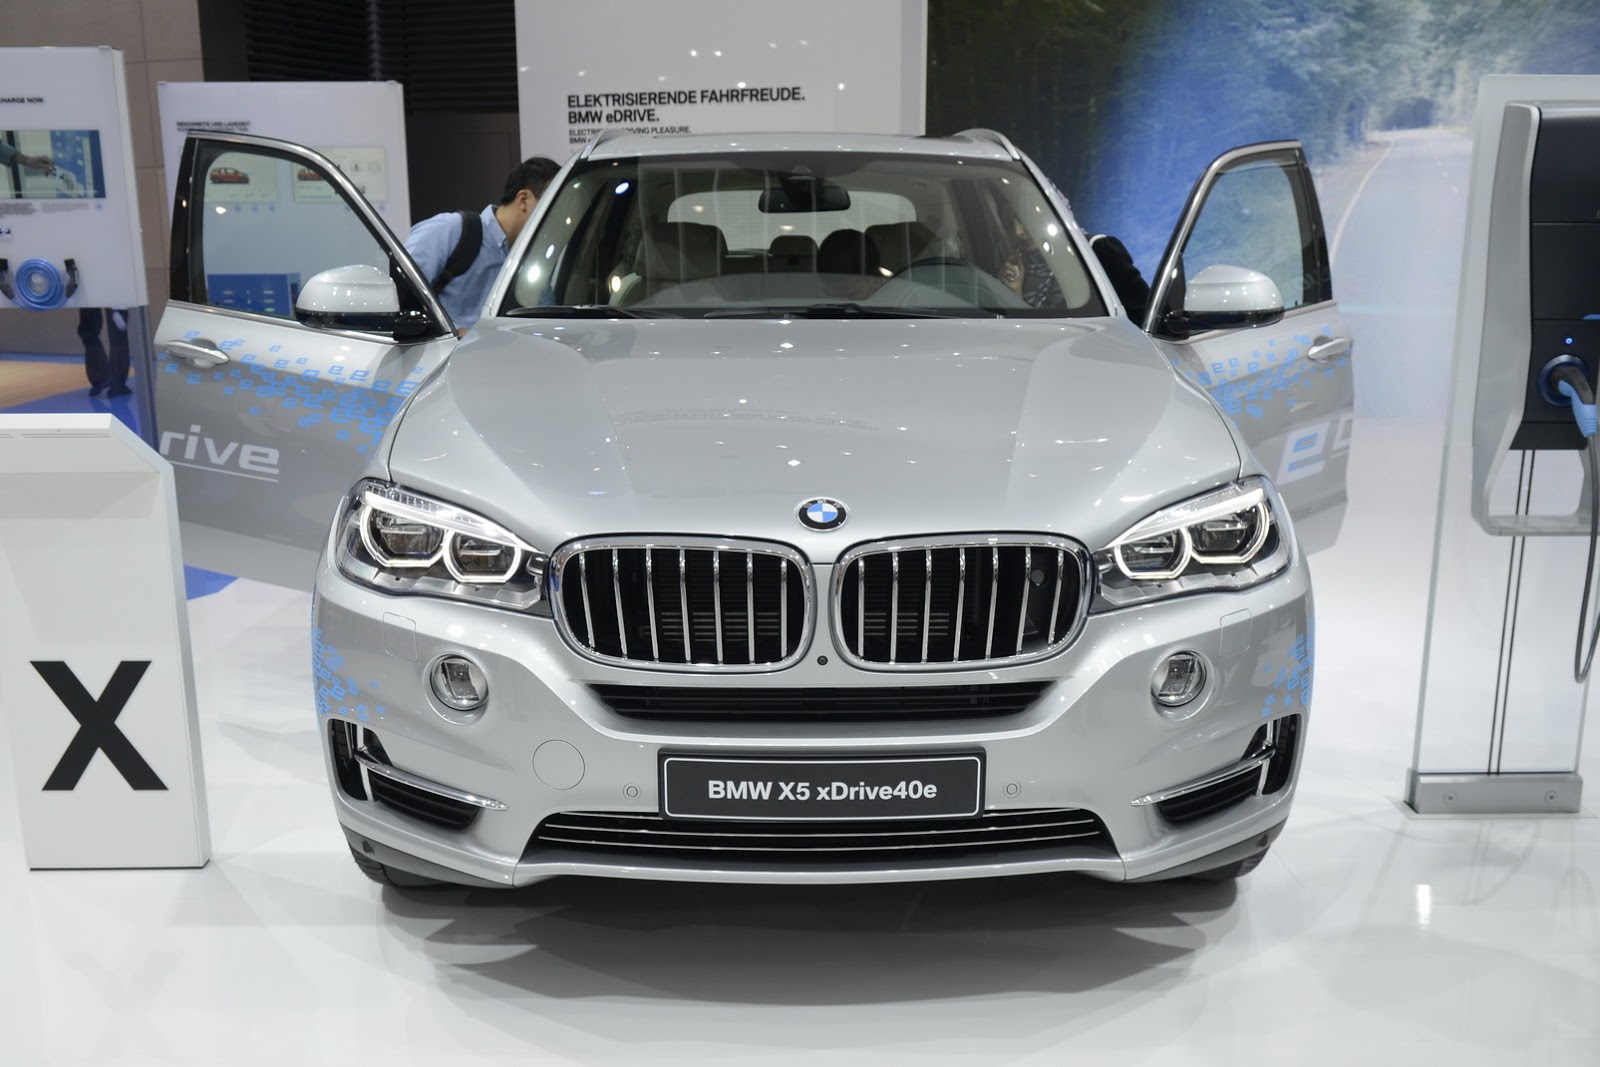 2015 Frankfurt Motor Show:BMW X5 xDrive40e Goes Official